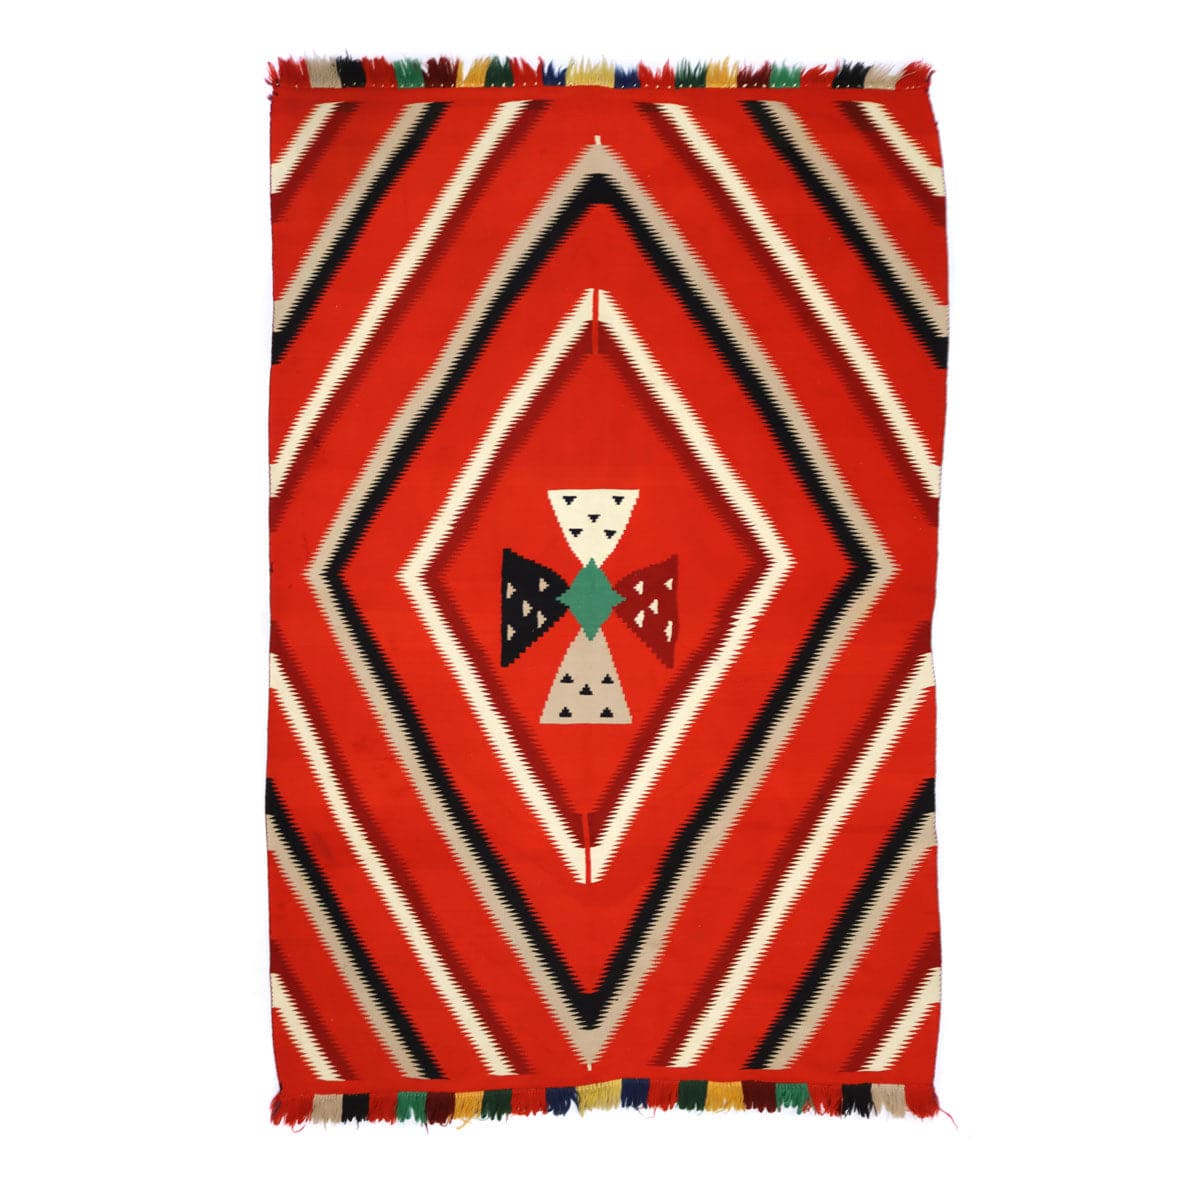 Navajo Germantown Blanket with Four Directions Cross Design c. 1890s, 84" x 60.5" (T92336-0821-003)